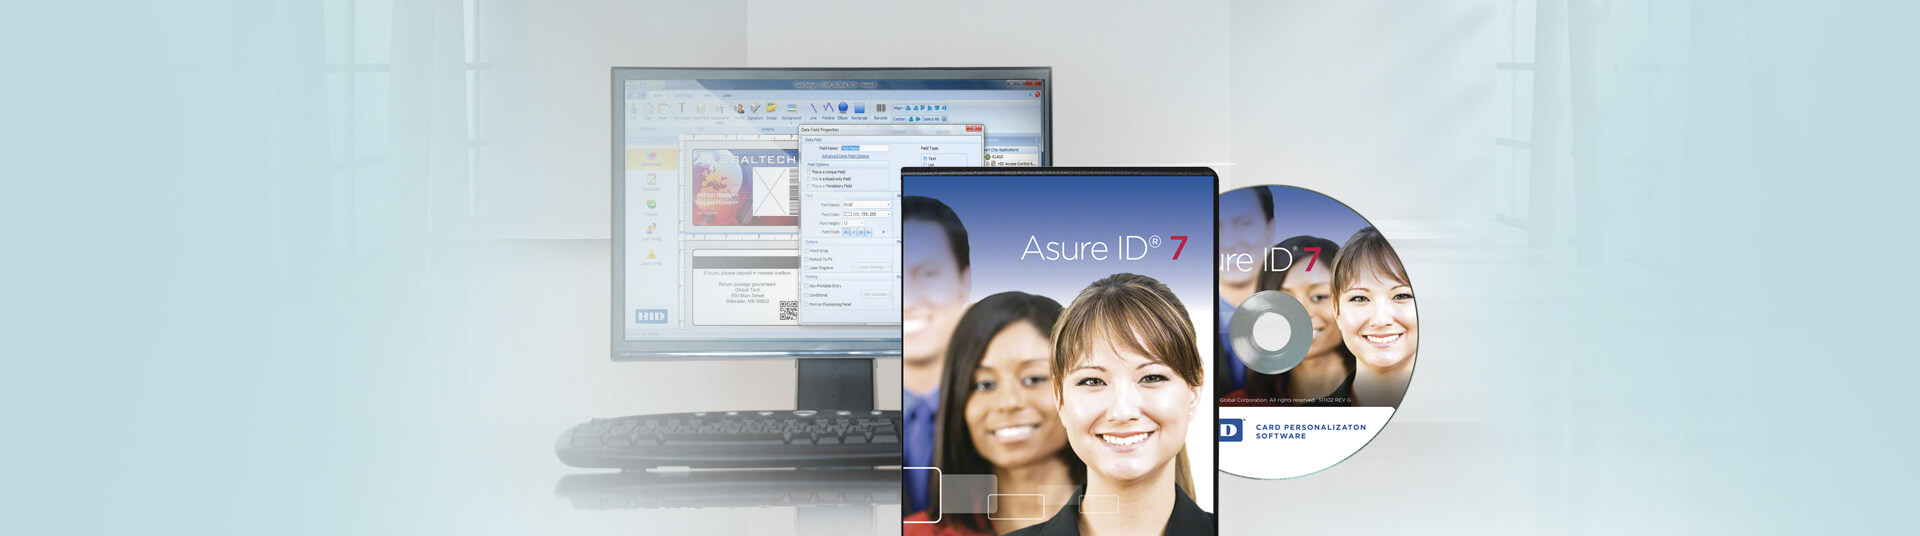 Asure ID Software Upgrades